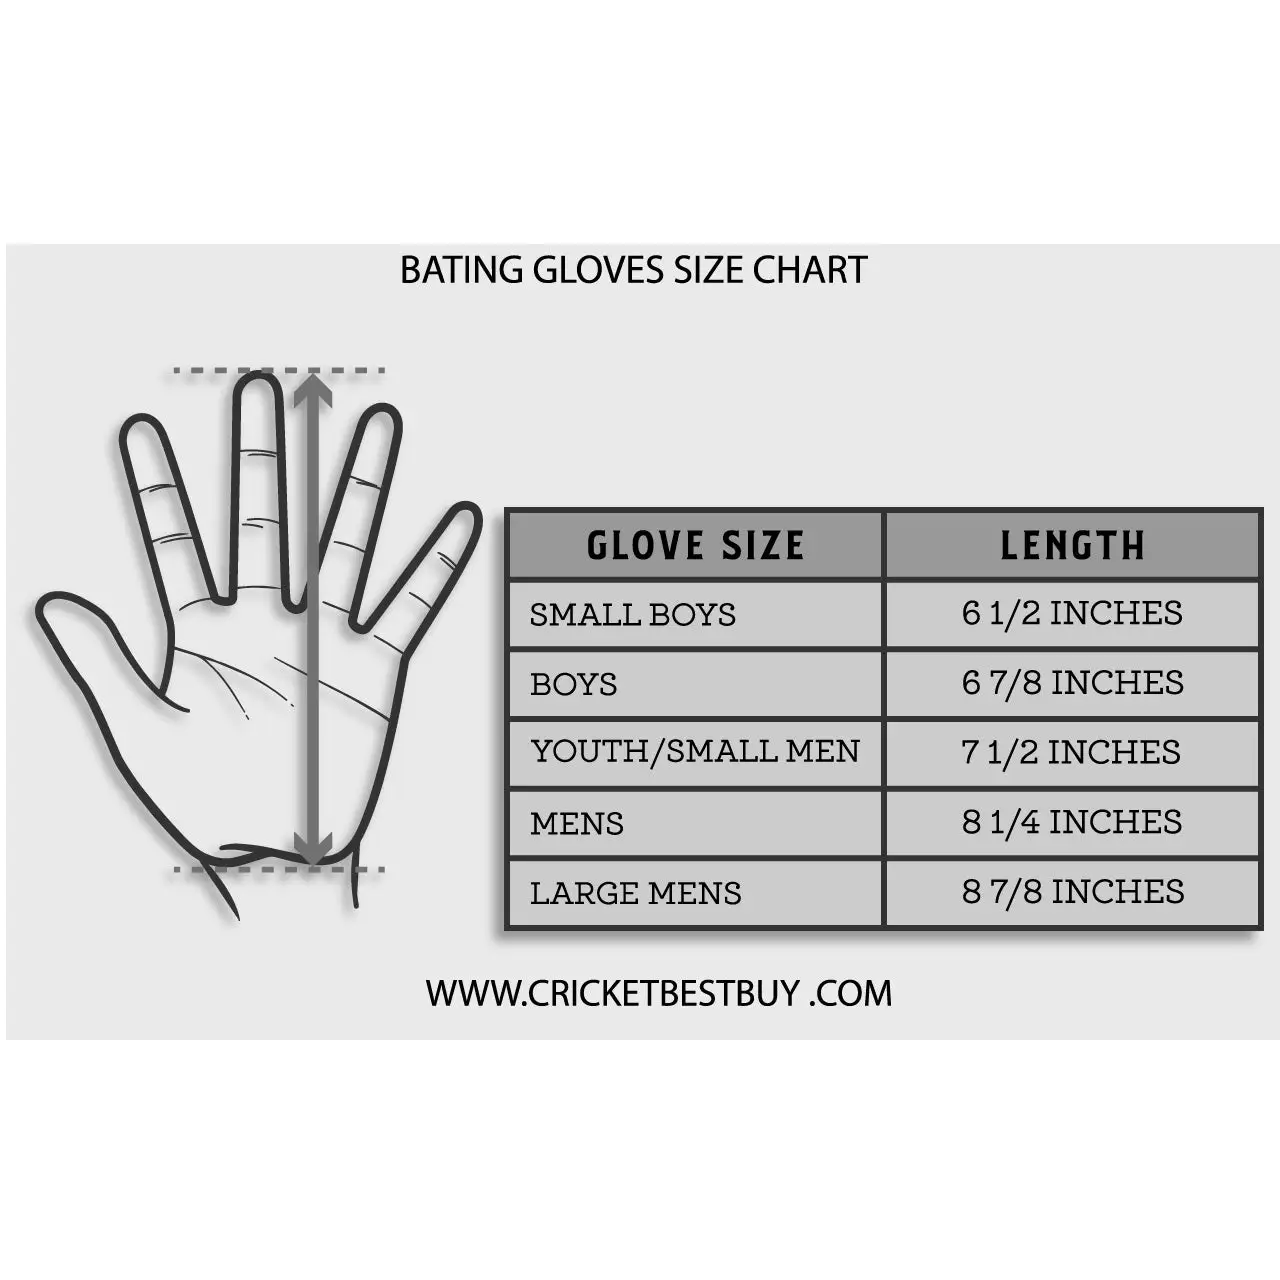 Aero P1 Hand Protector Cricket Batting Gloves Clearance no returns - GLOVE - BATTING